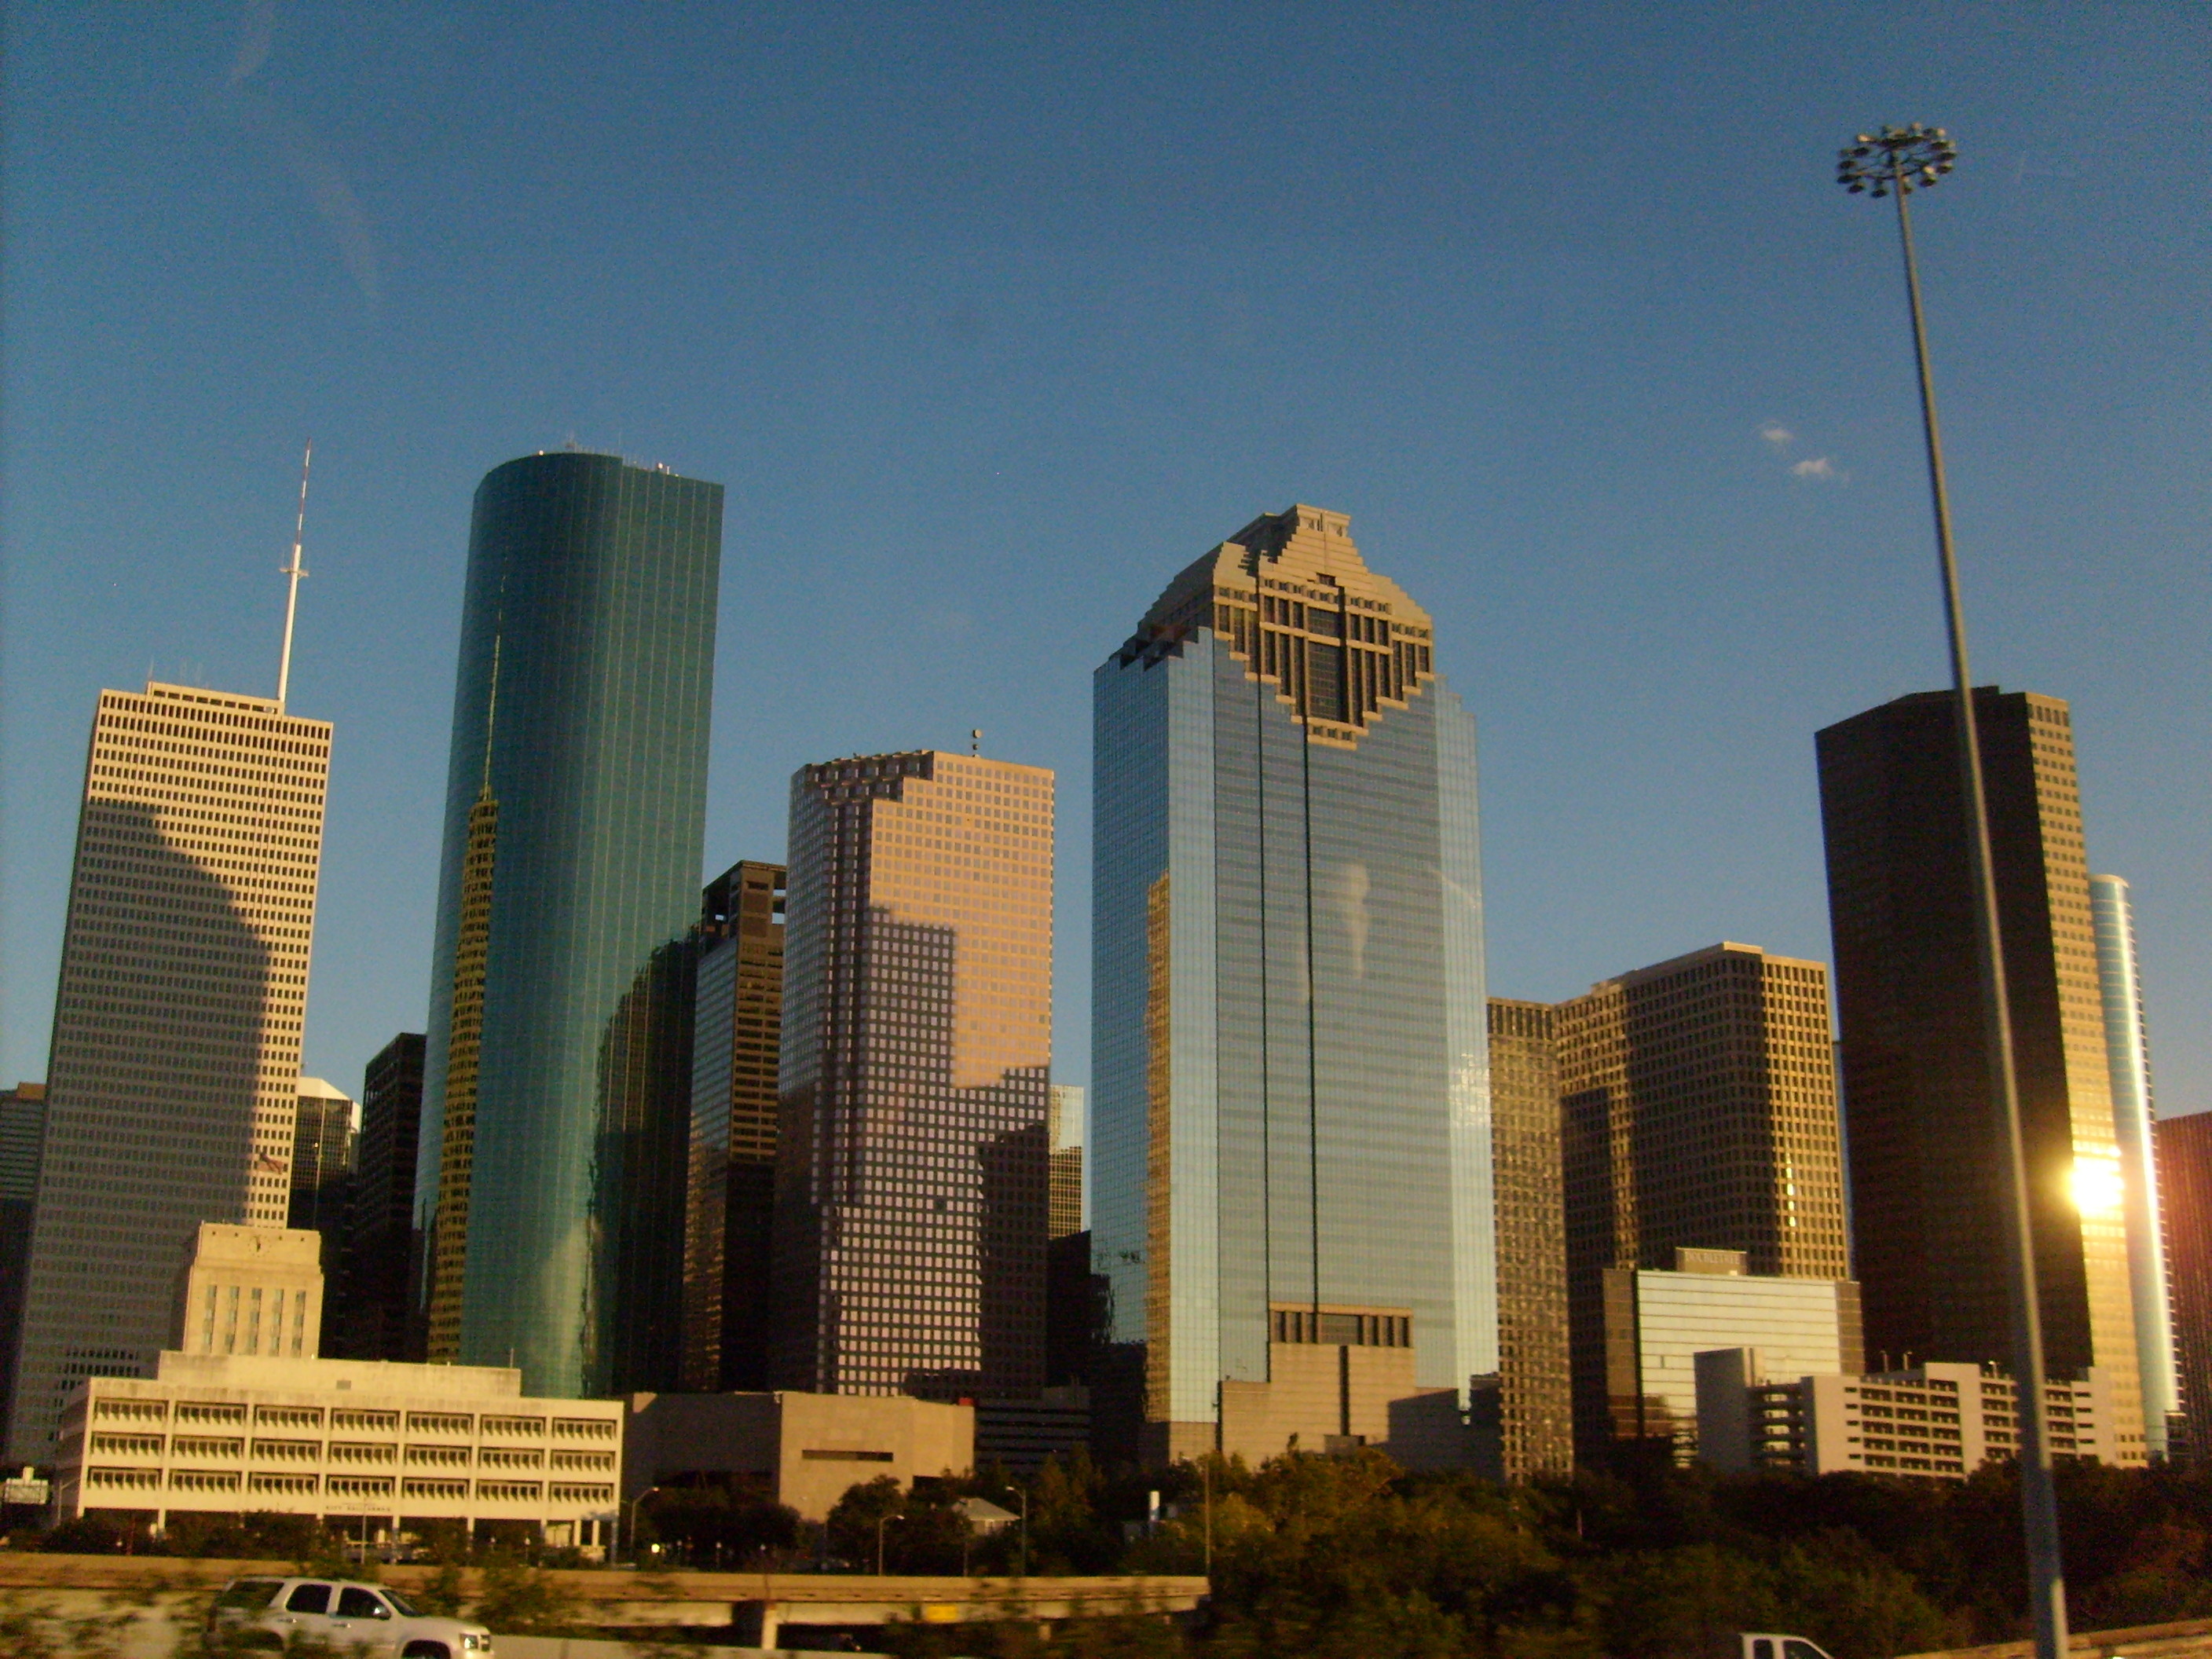 2816x2112 FileDowntown Houston Skyline 2009jpg Wikipedia the 